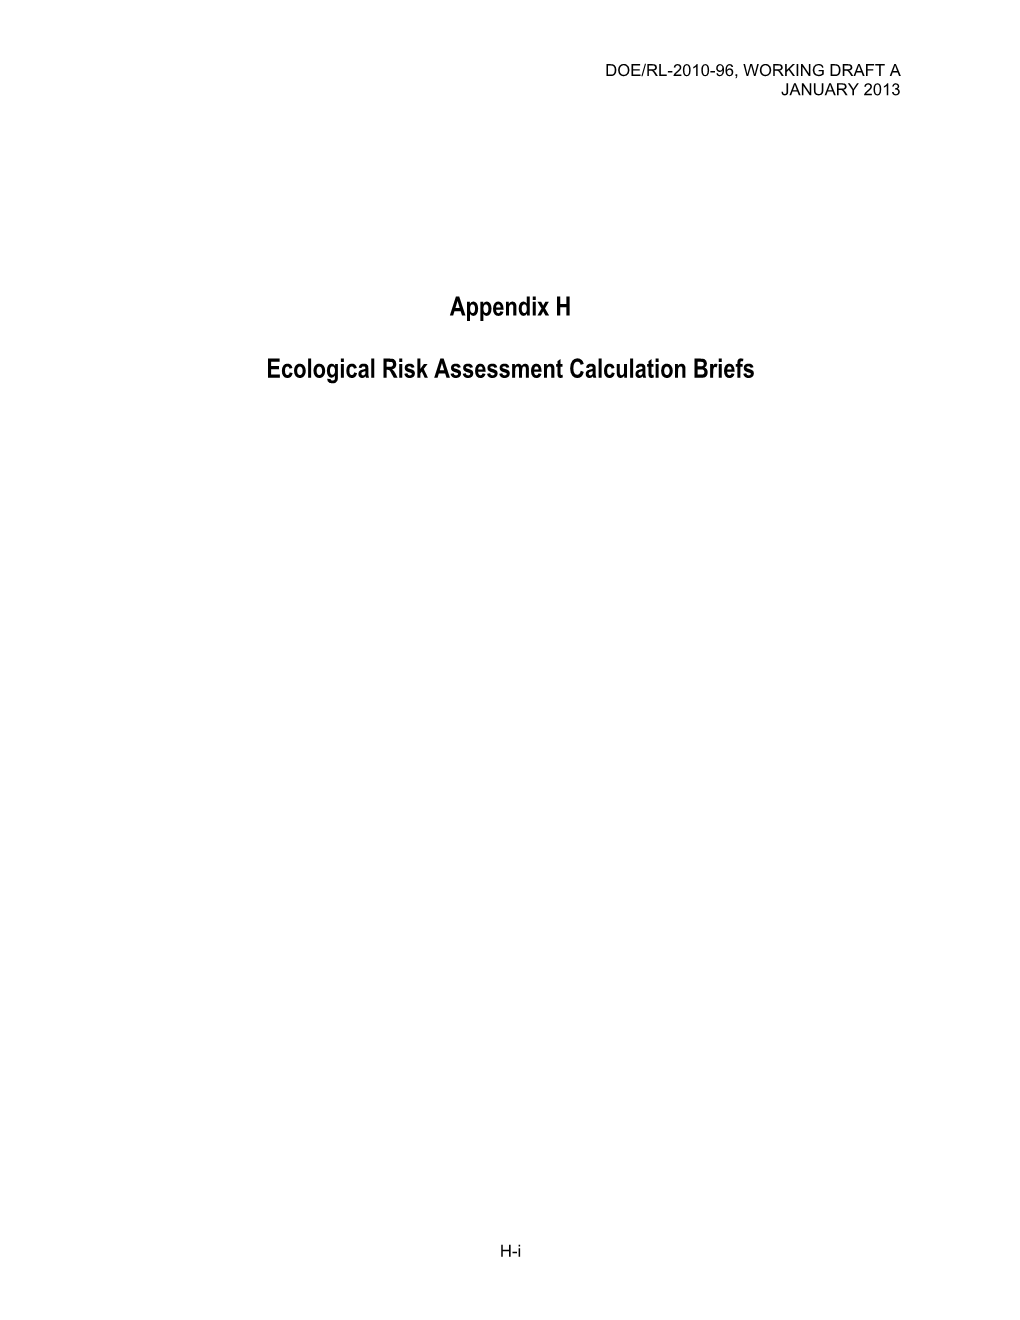 Appendix H Ecological Risk Assessment Calculation Briefs